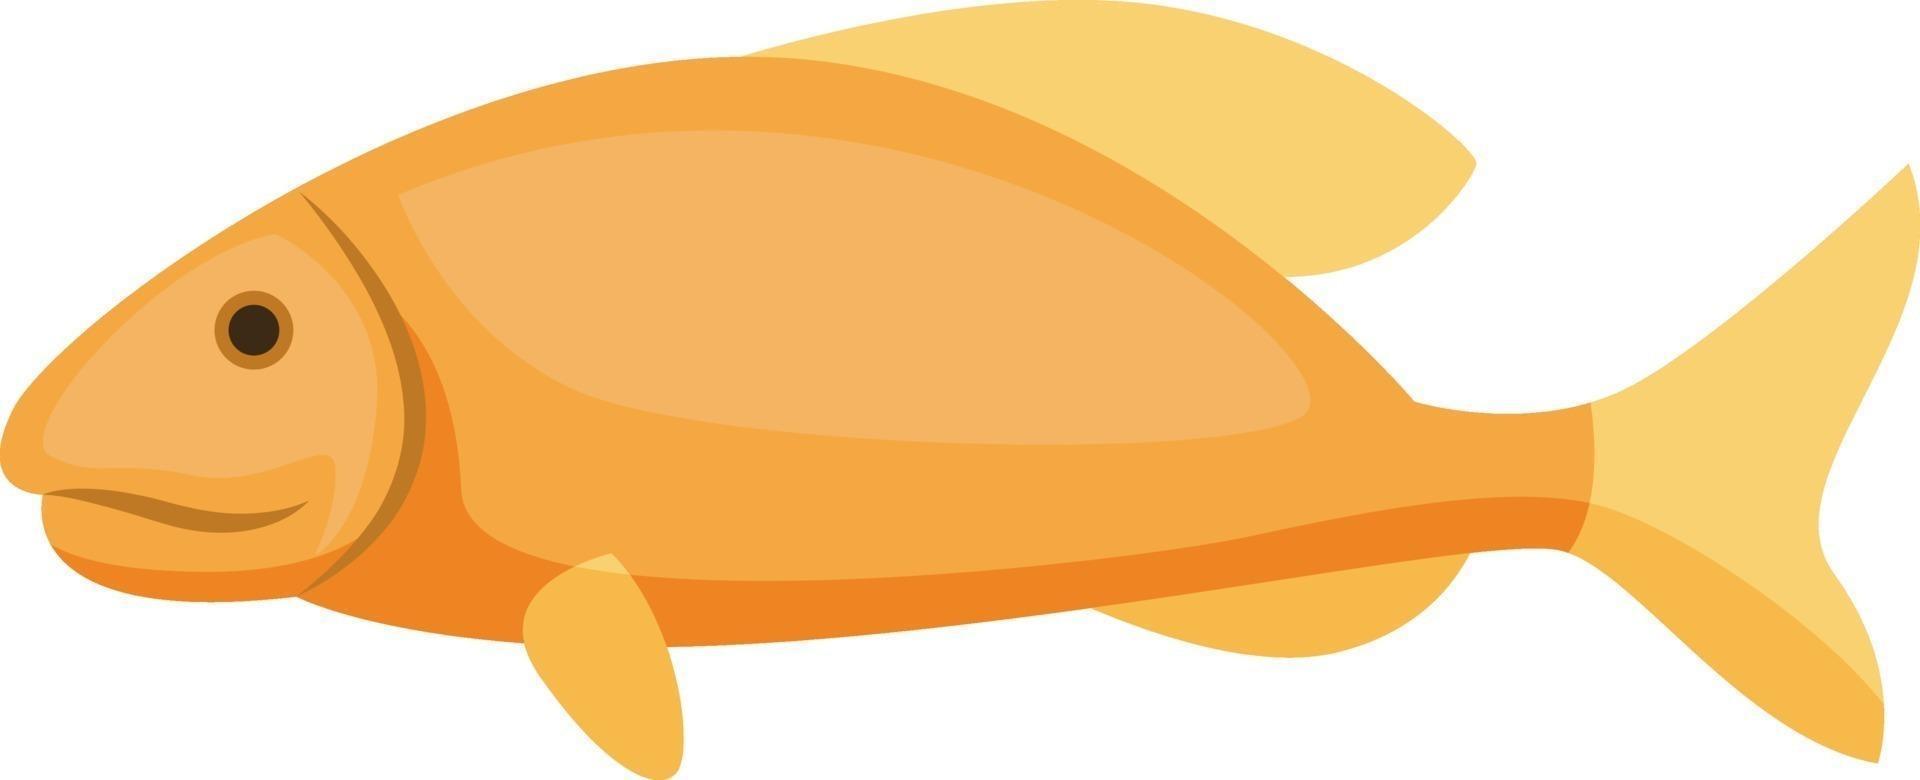 gul fisk, illustration, vektor på vit bakgrund